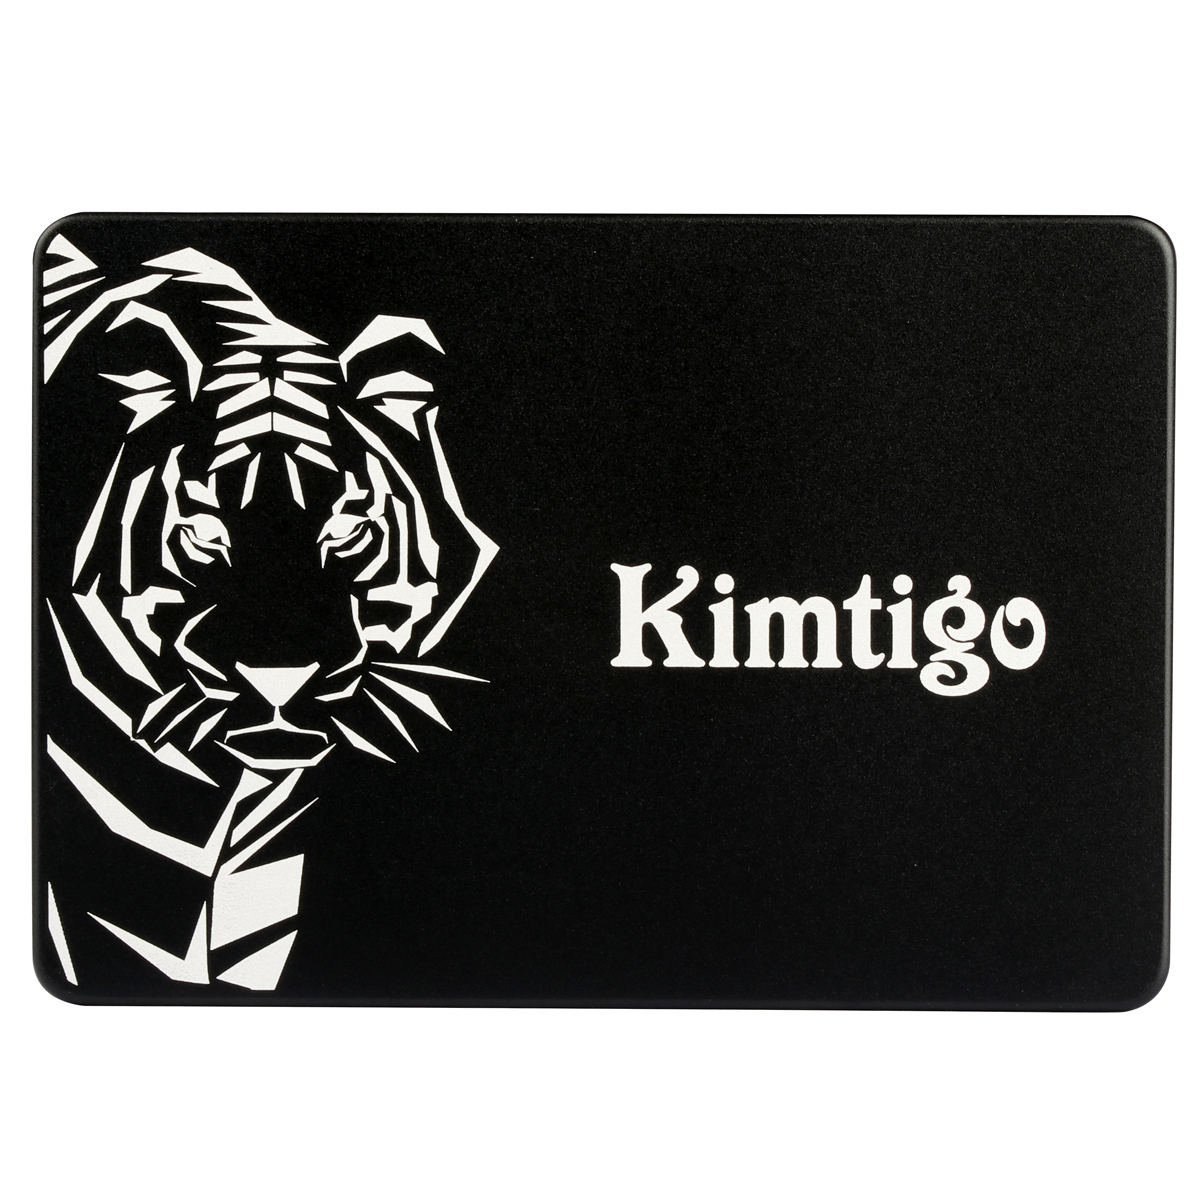 Kimtigo-KTA-320-25-inch-SATA-3-Solid-State-Drives-128GB-256GB-512GB-1T-Hard-Disk-Up-to-Above-500MBs--1940486-1